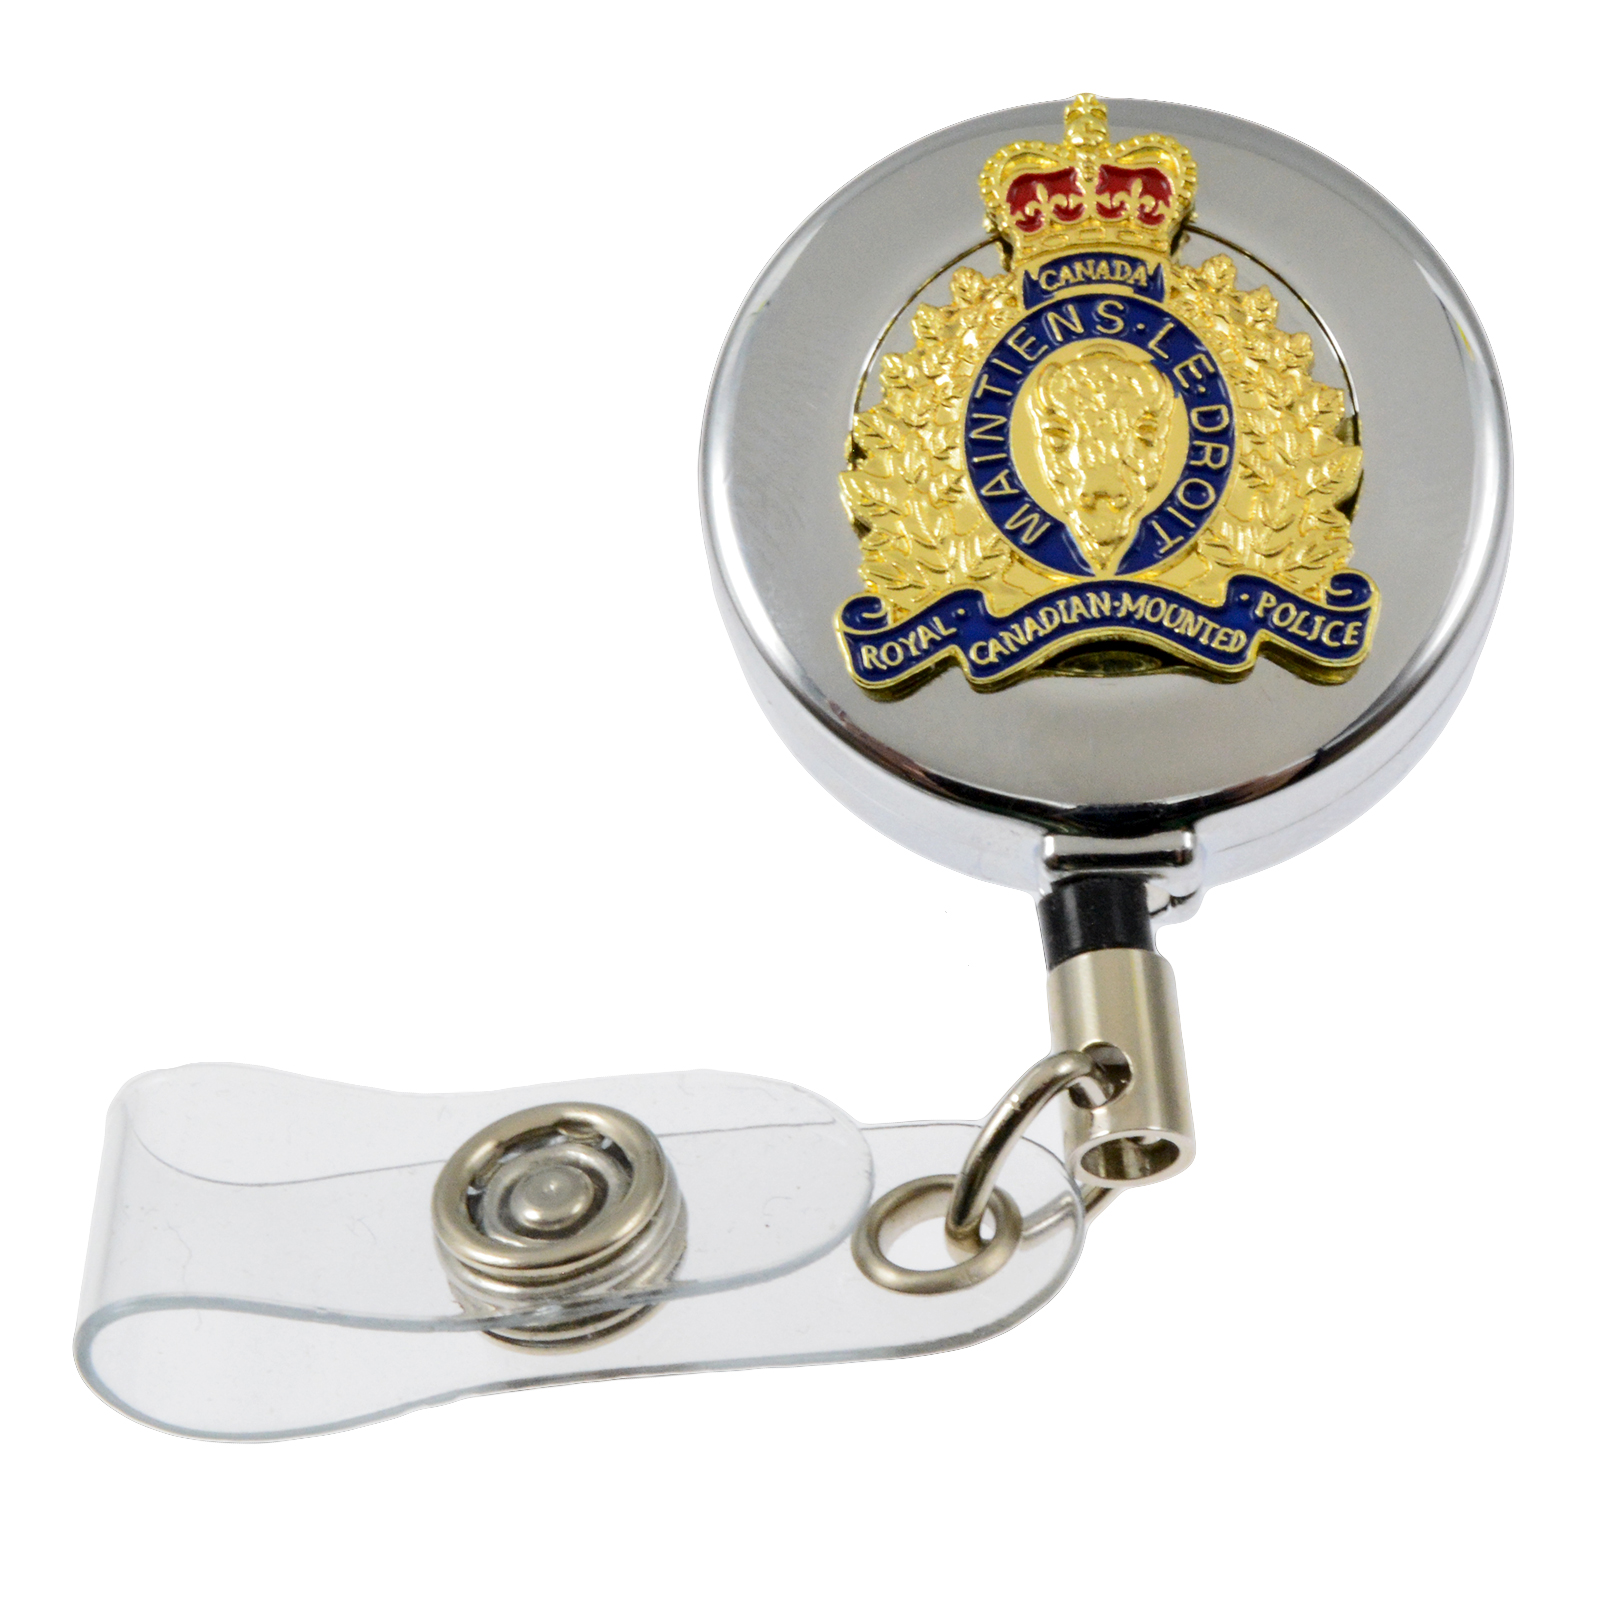 RCMP Crest Badge Reel, RCMP Crest Retractable ID Holder